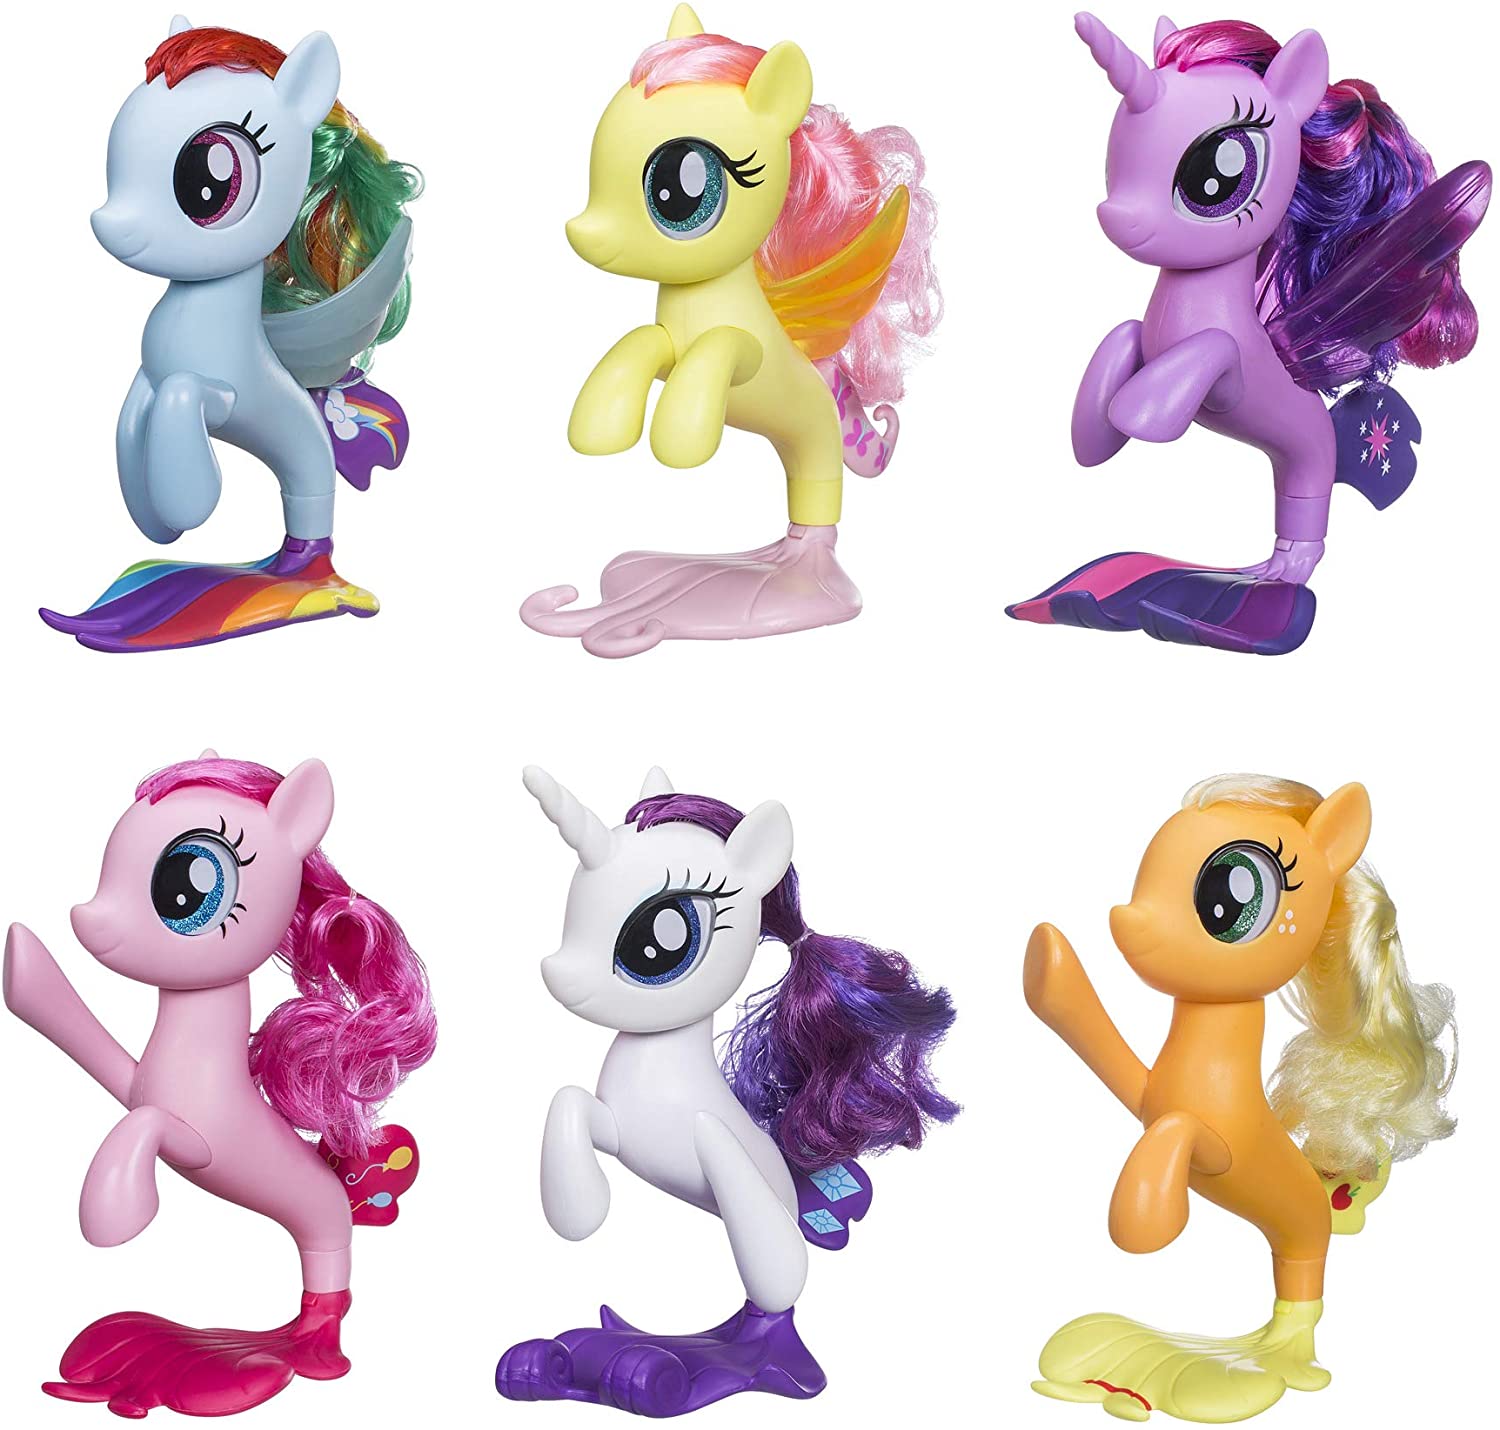 Toys My Little Pony | tunersread.com